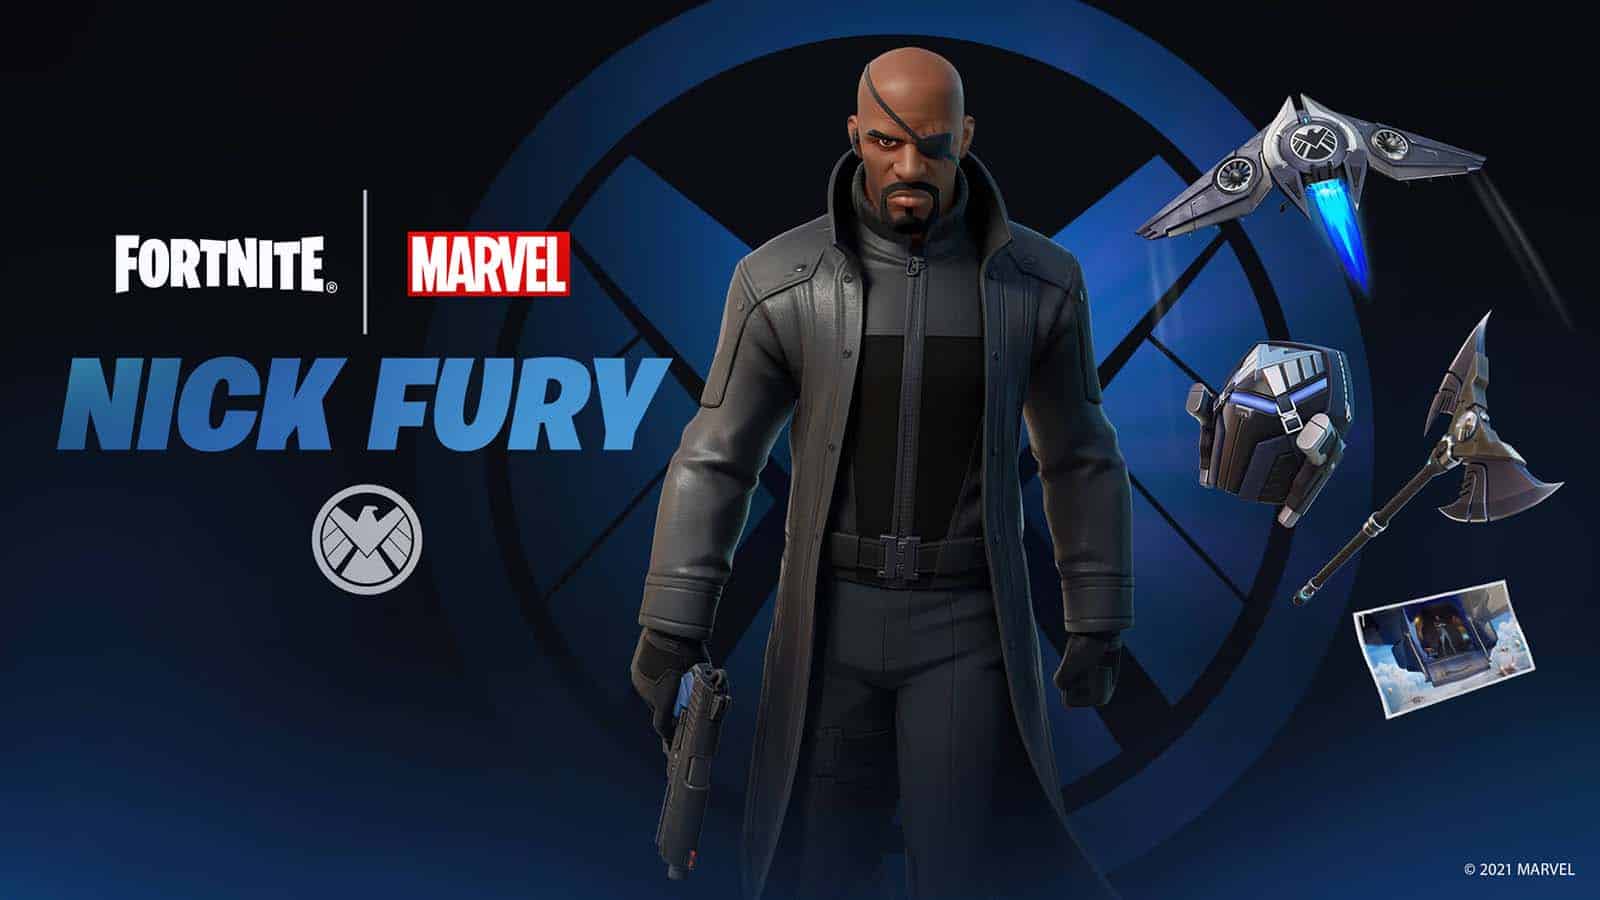 Nick Fury Fortnite skin and accessories